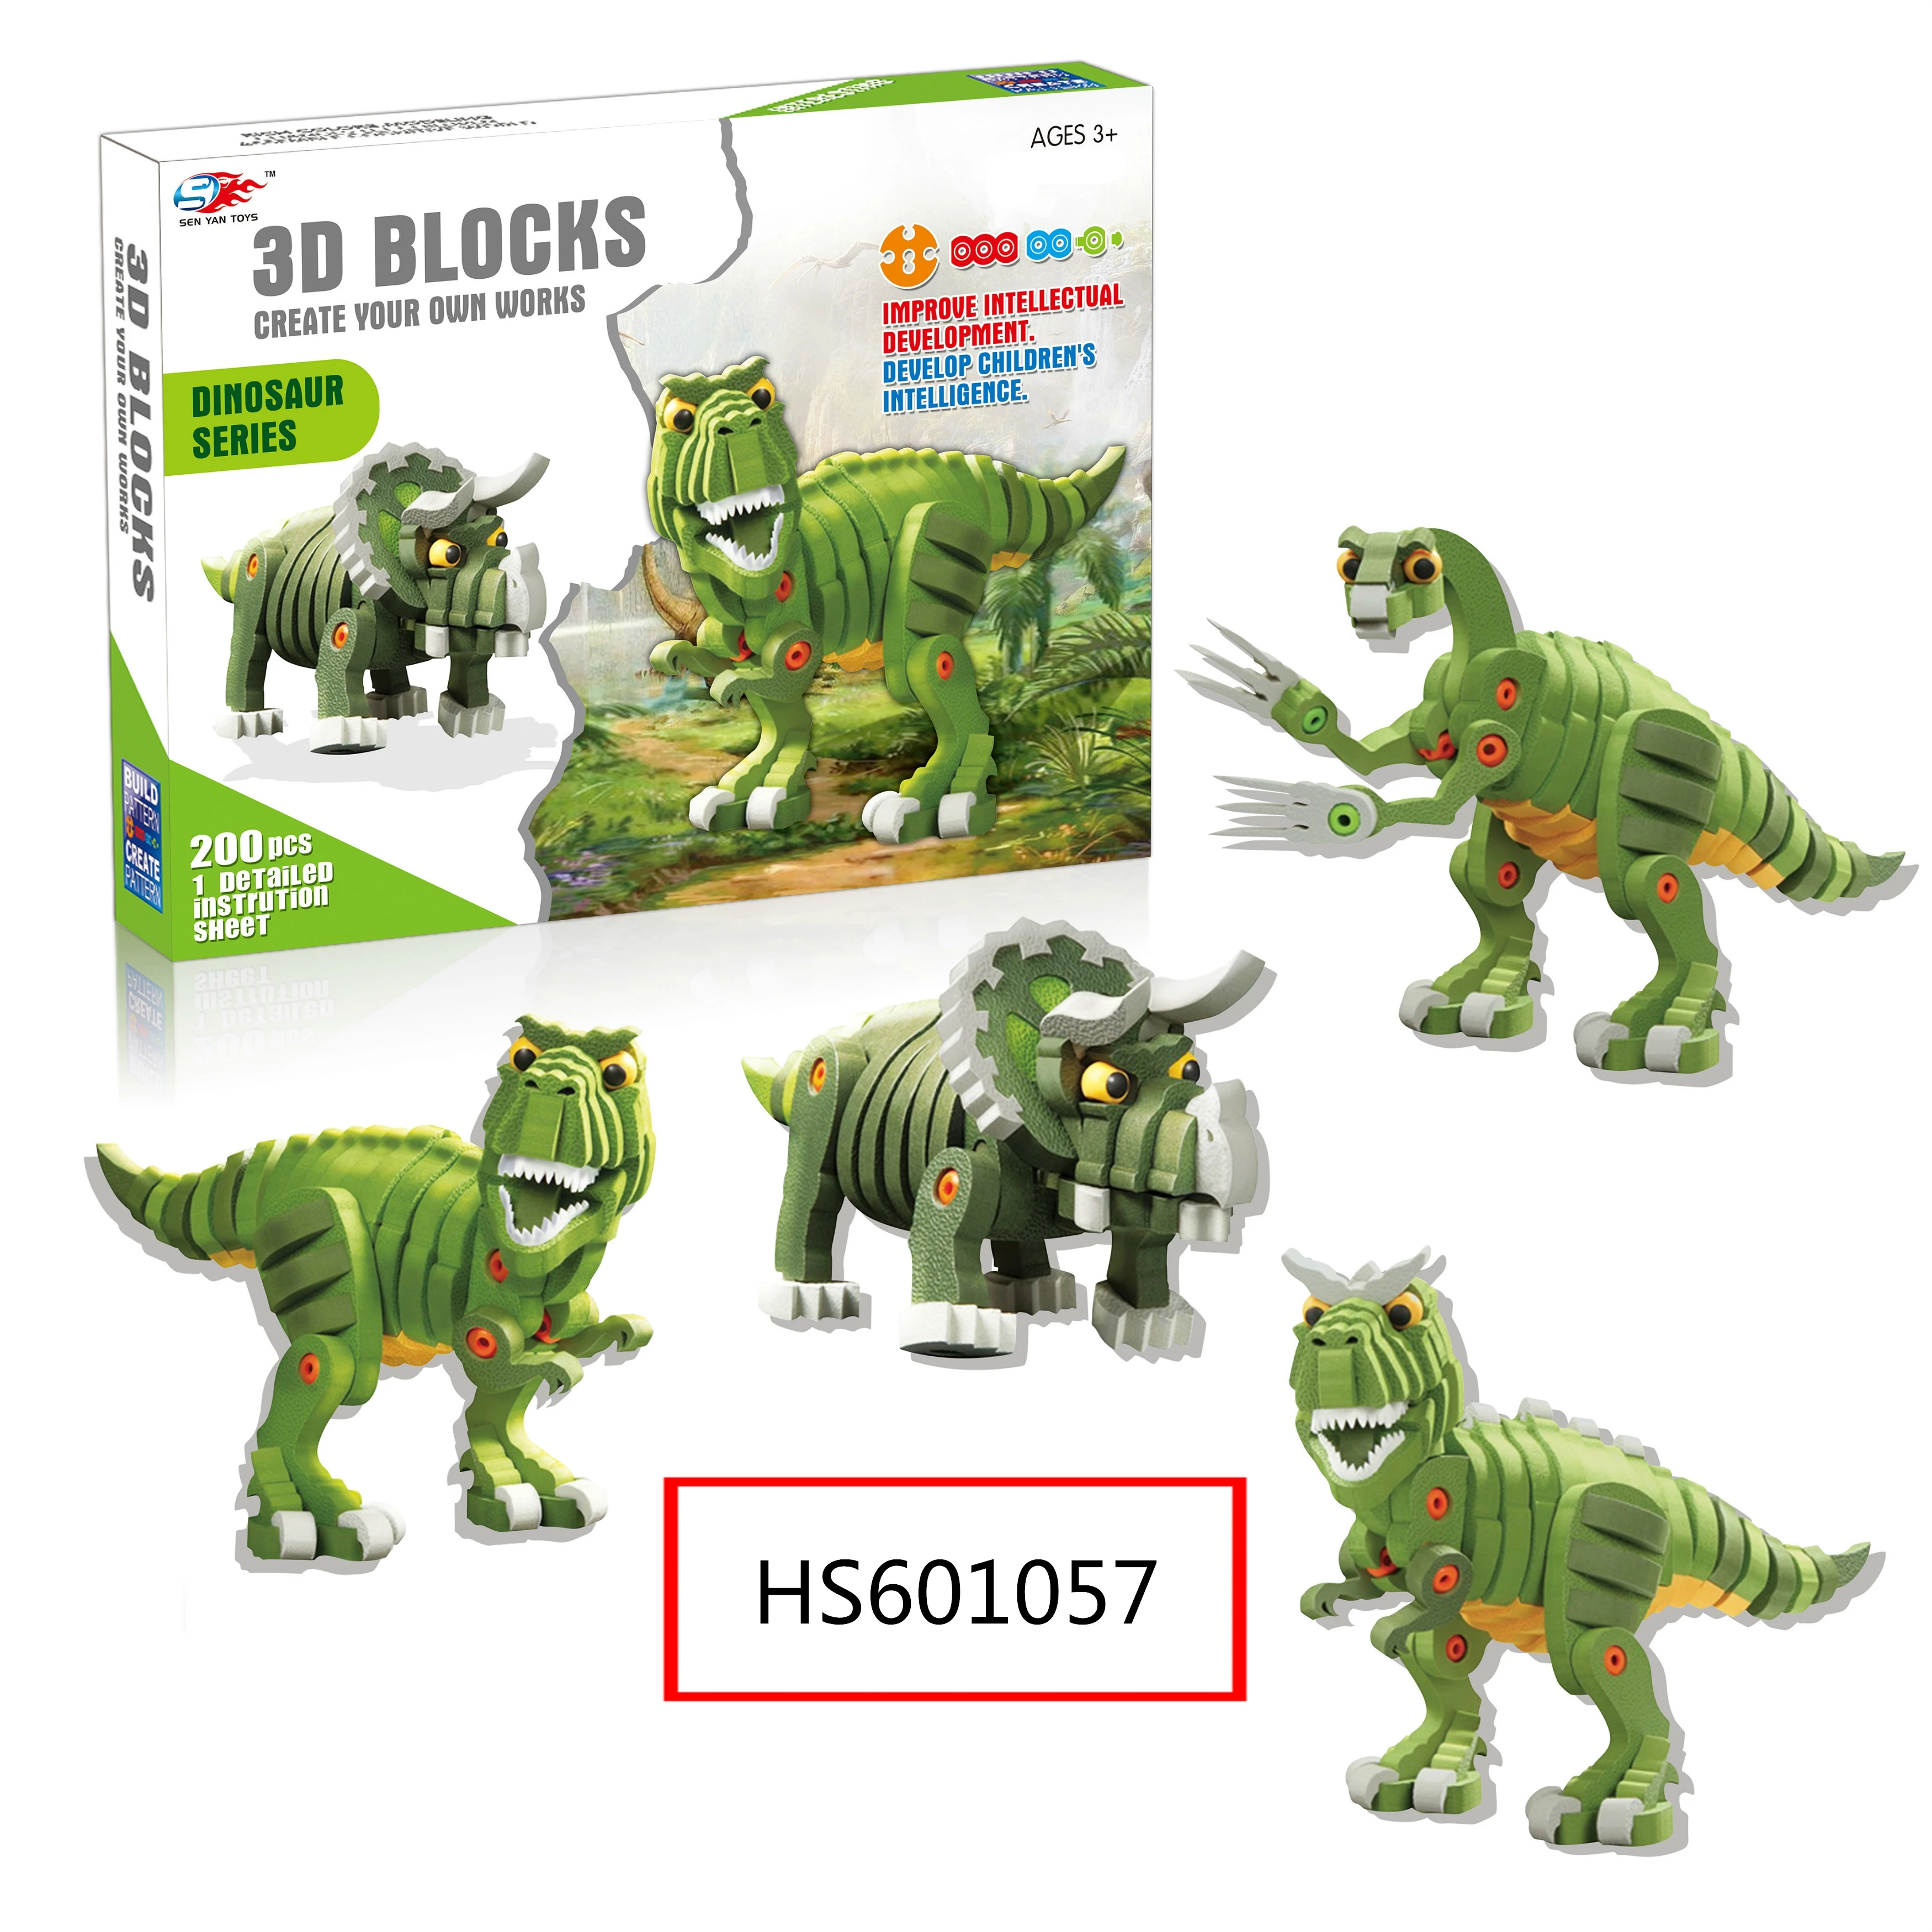 HS601057, Huwsin Toys, Educational toy, Dinosaur series, 200pcs, 3D Blocks